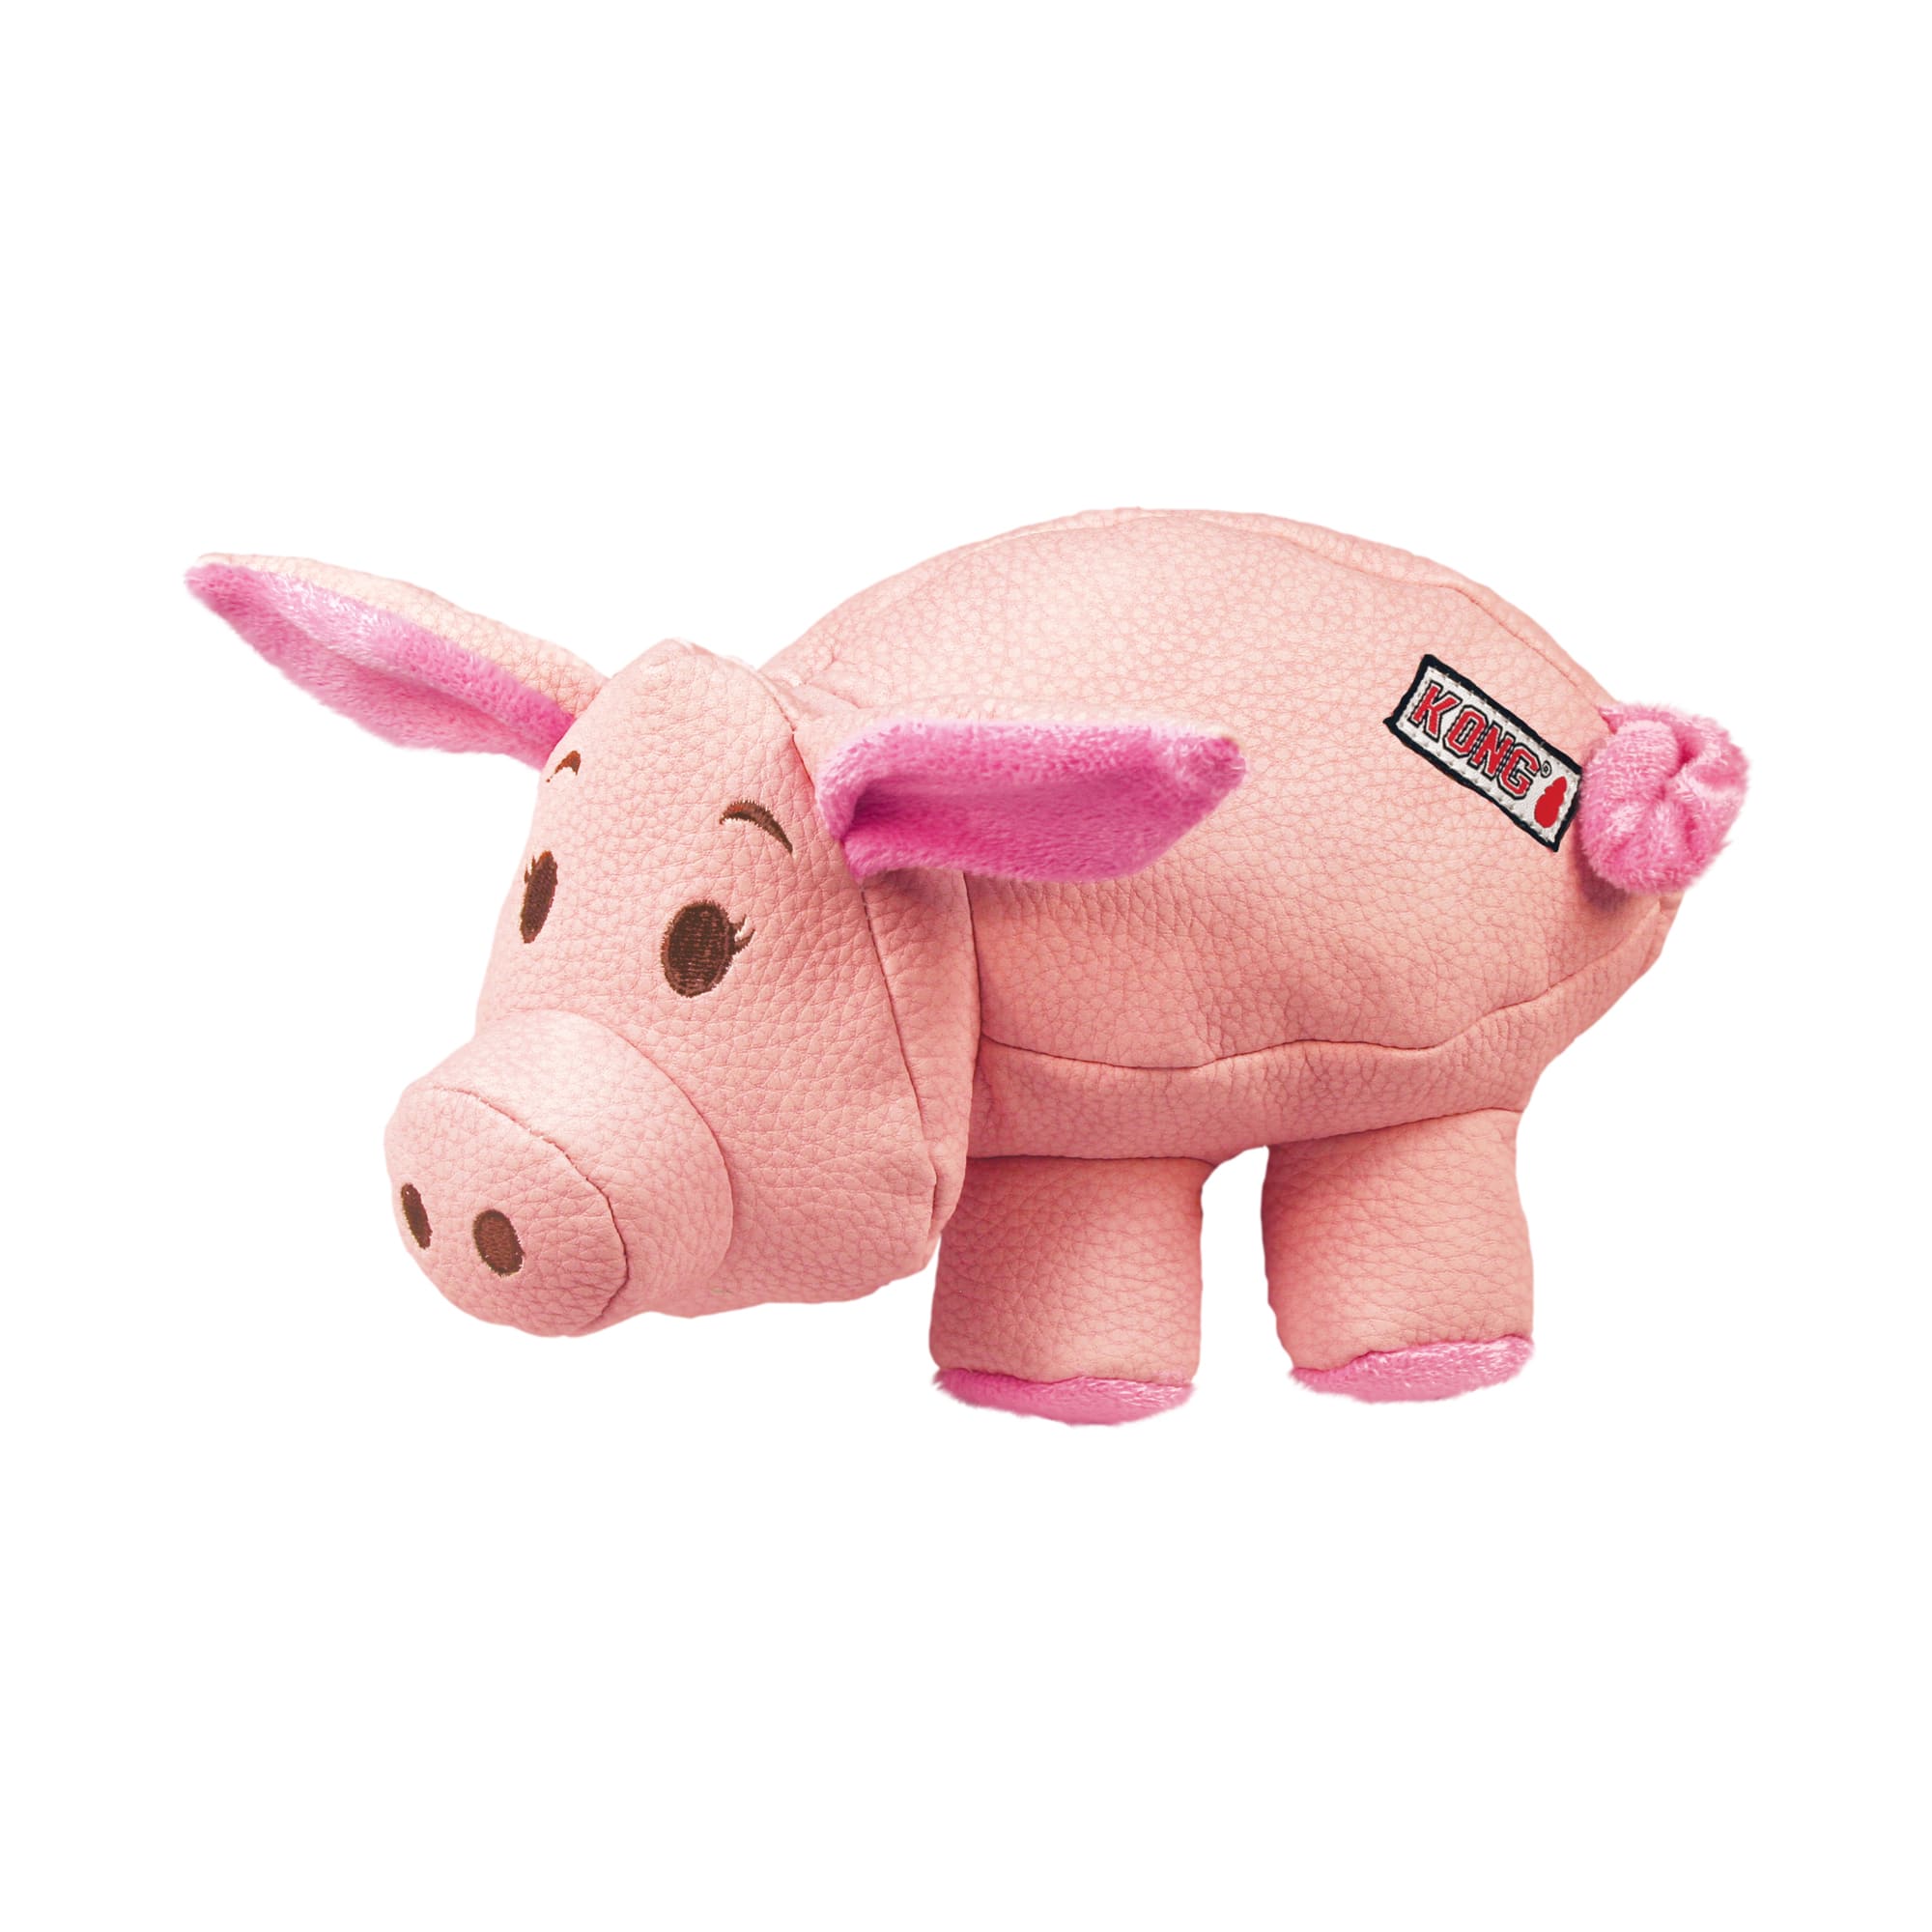 Photos - Dog Toy KONG Phatz Pig, Small, Pink RPA33 